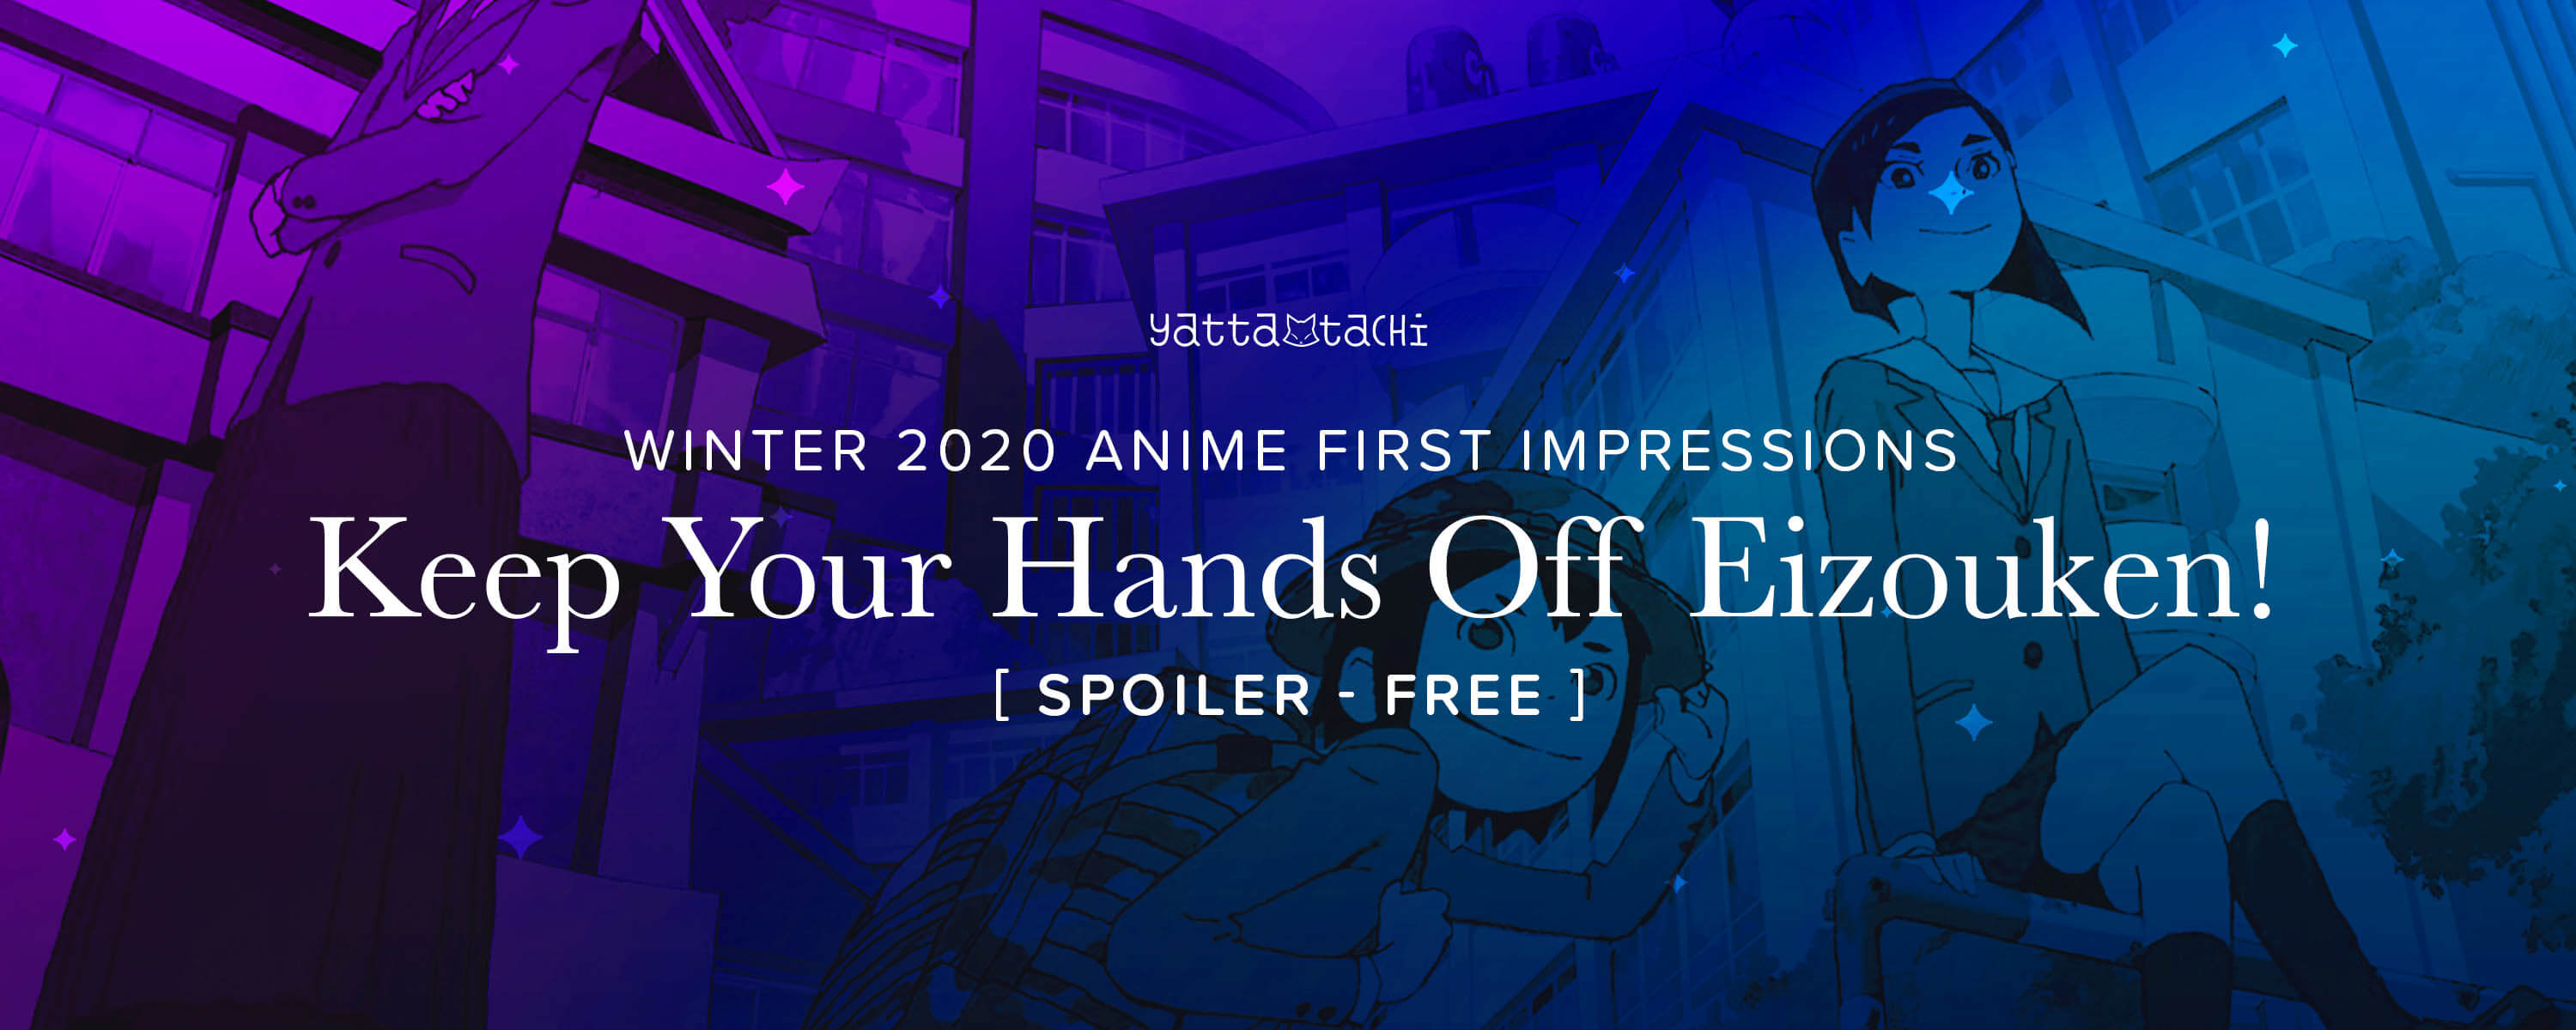 Keep Your Hands Off Eizouken Winter 2020 Anime First